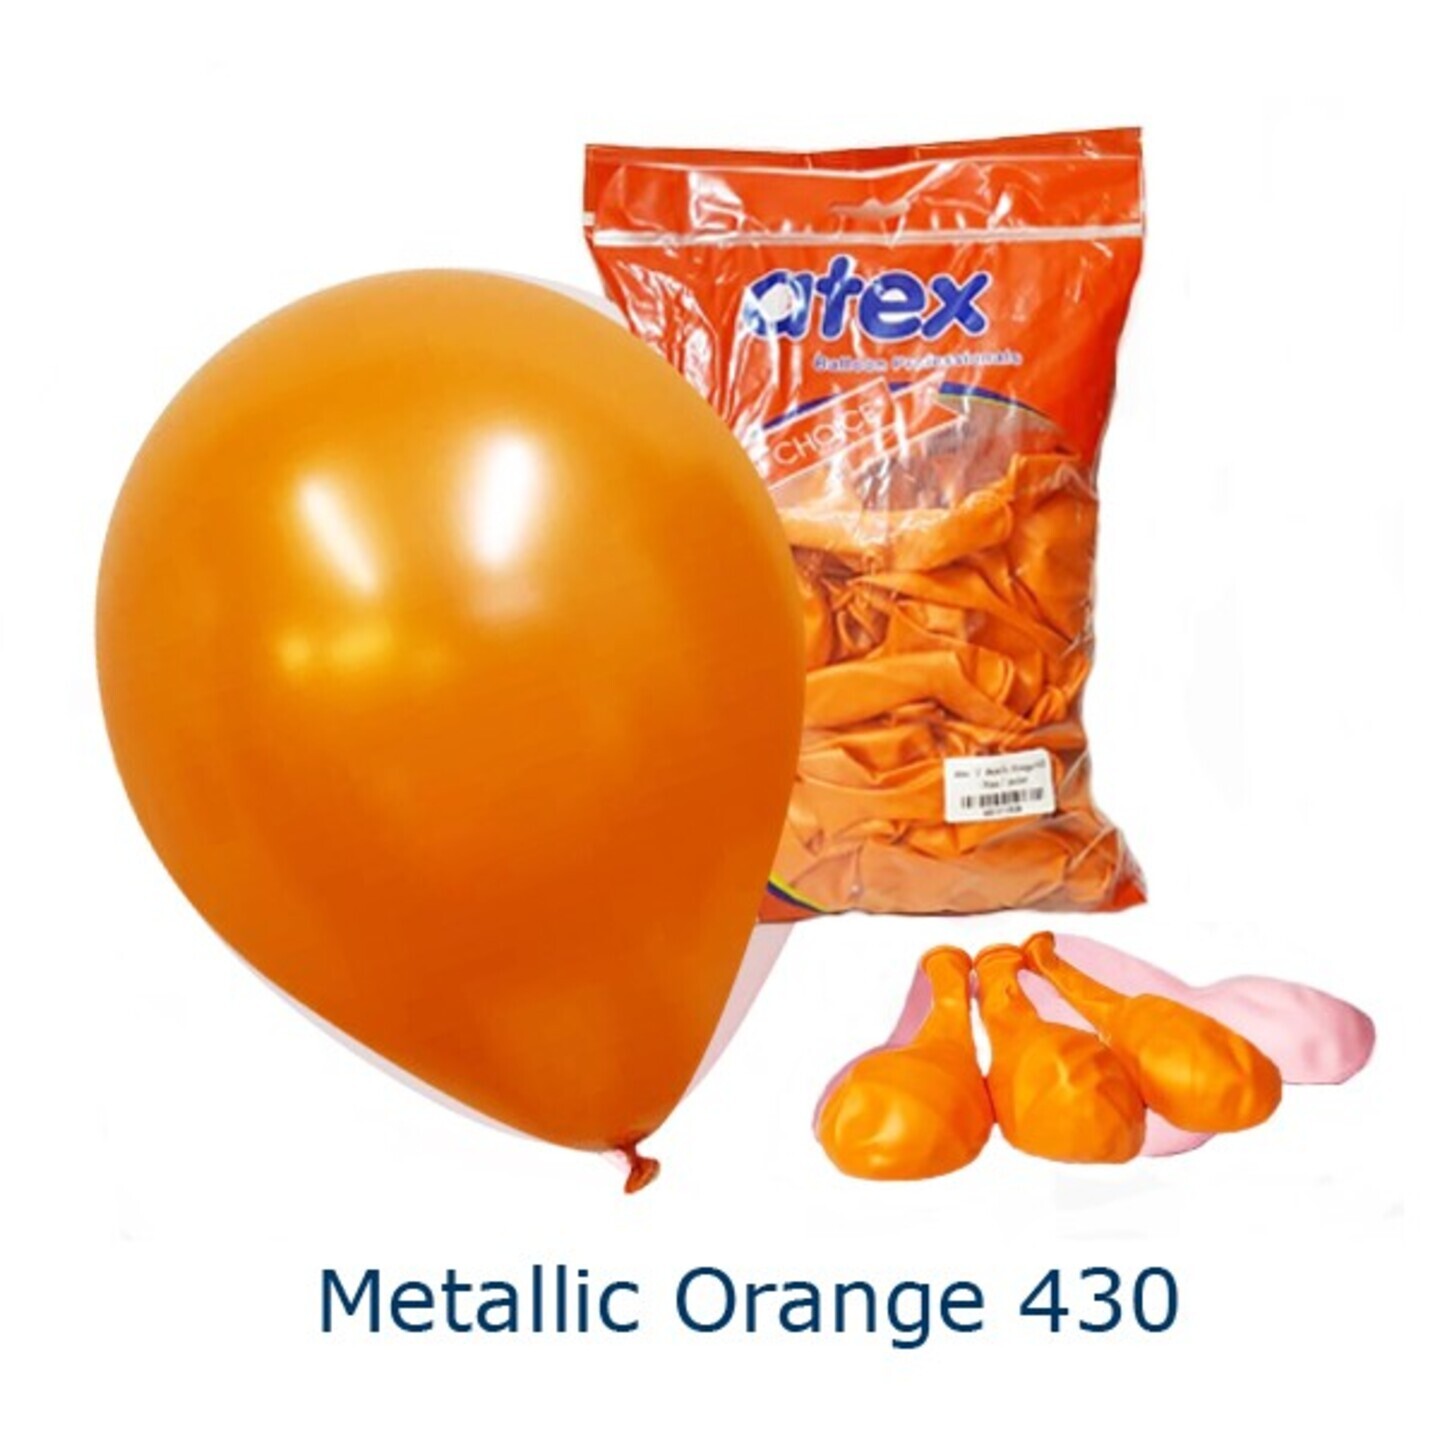 Metallic Orange 430